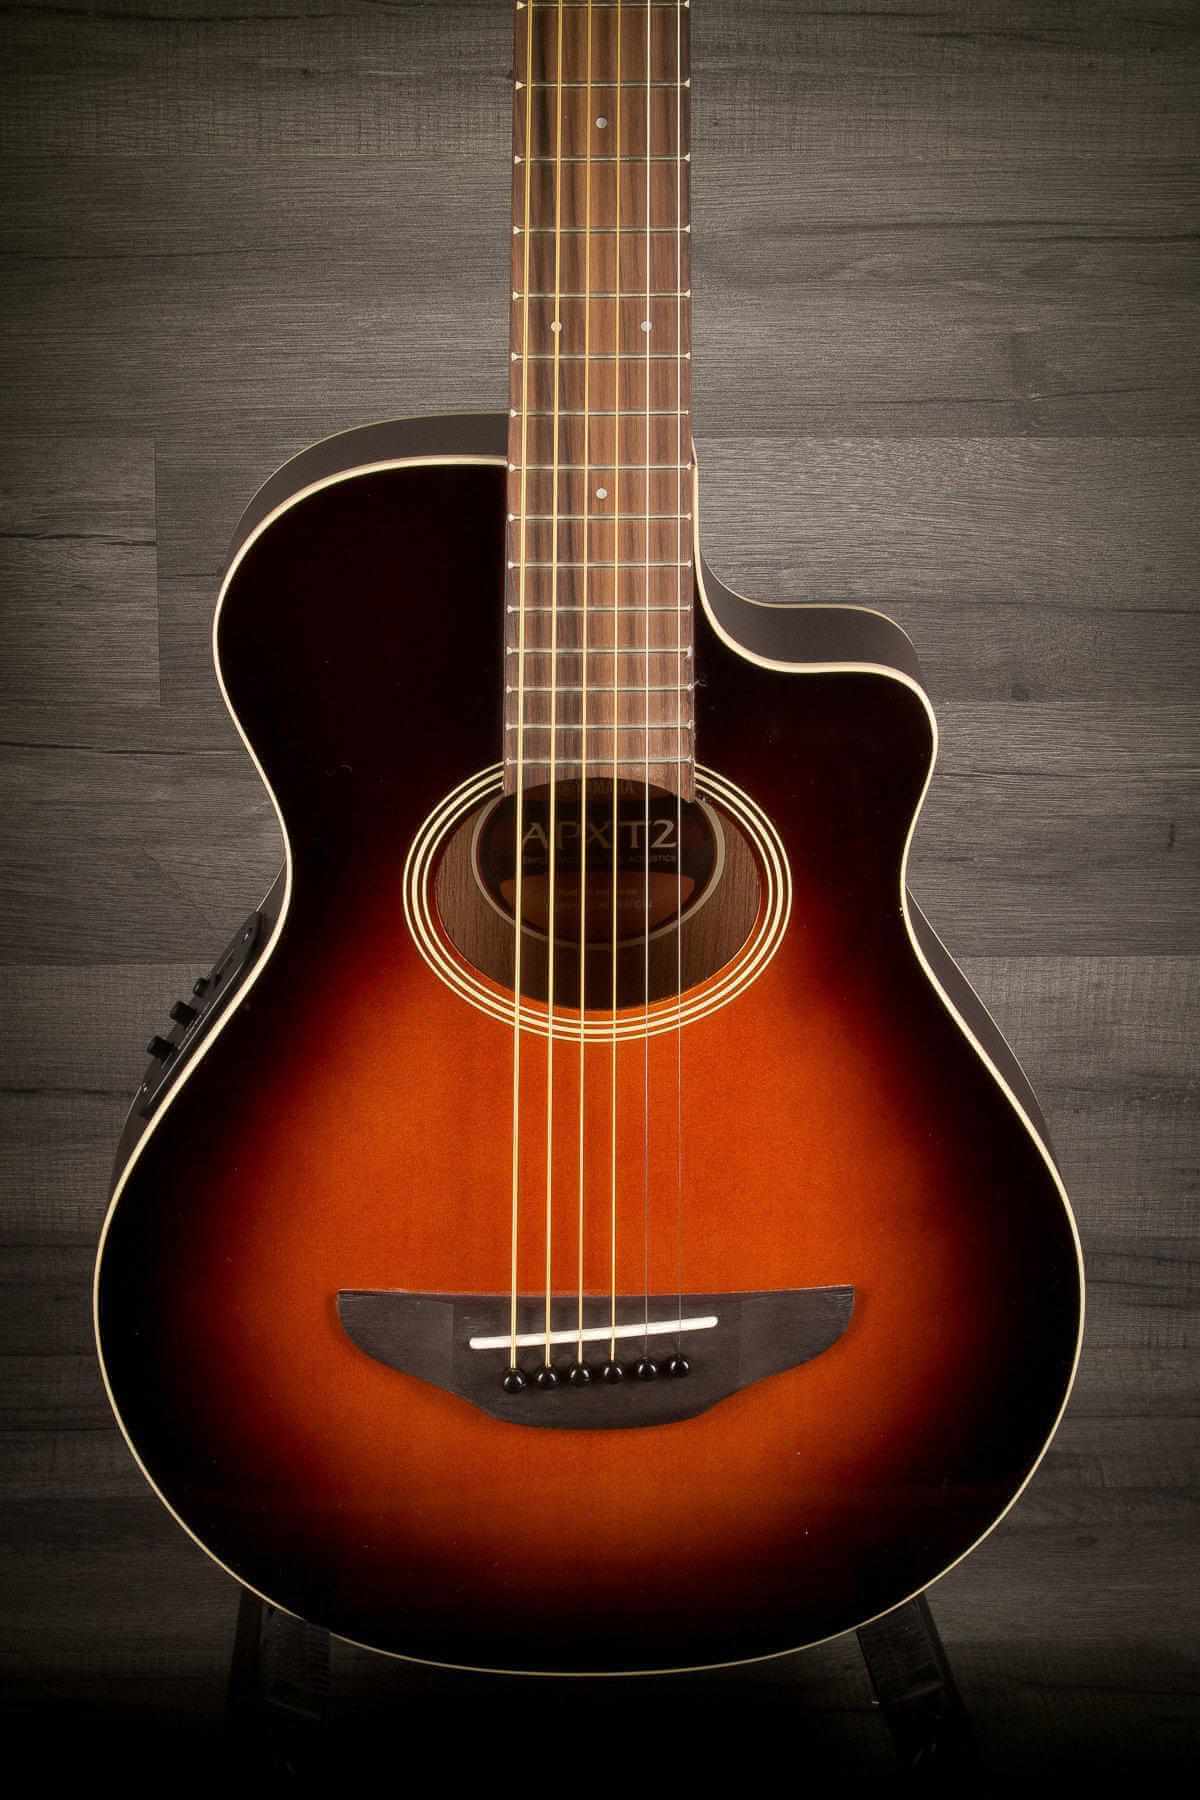 Yamaha Acoustic Guitar Yamaha APXT2 Travel Acoustic Guitar - Old Violin Sunburst